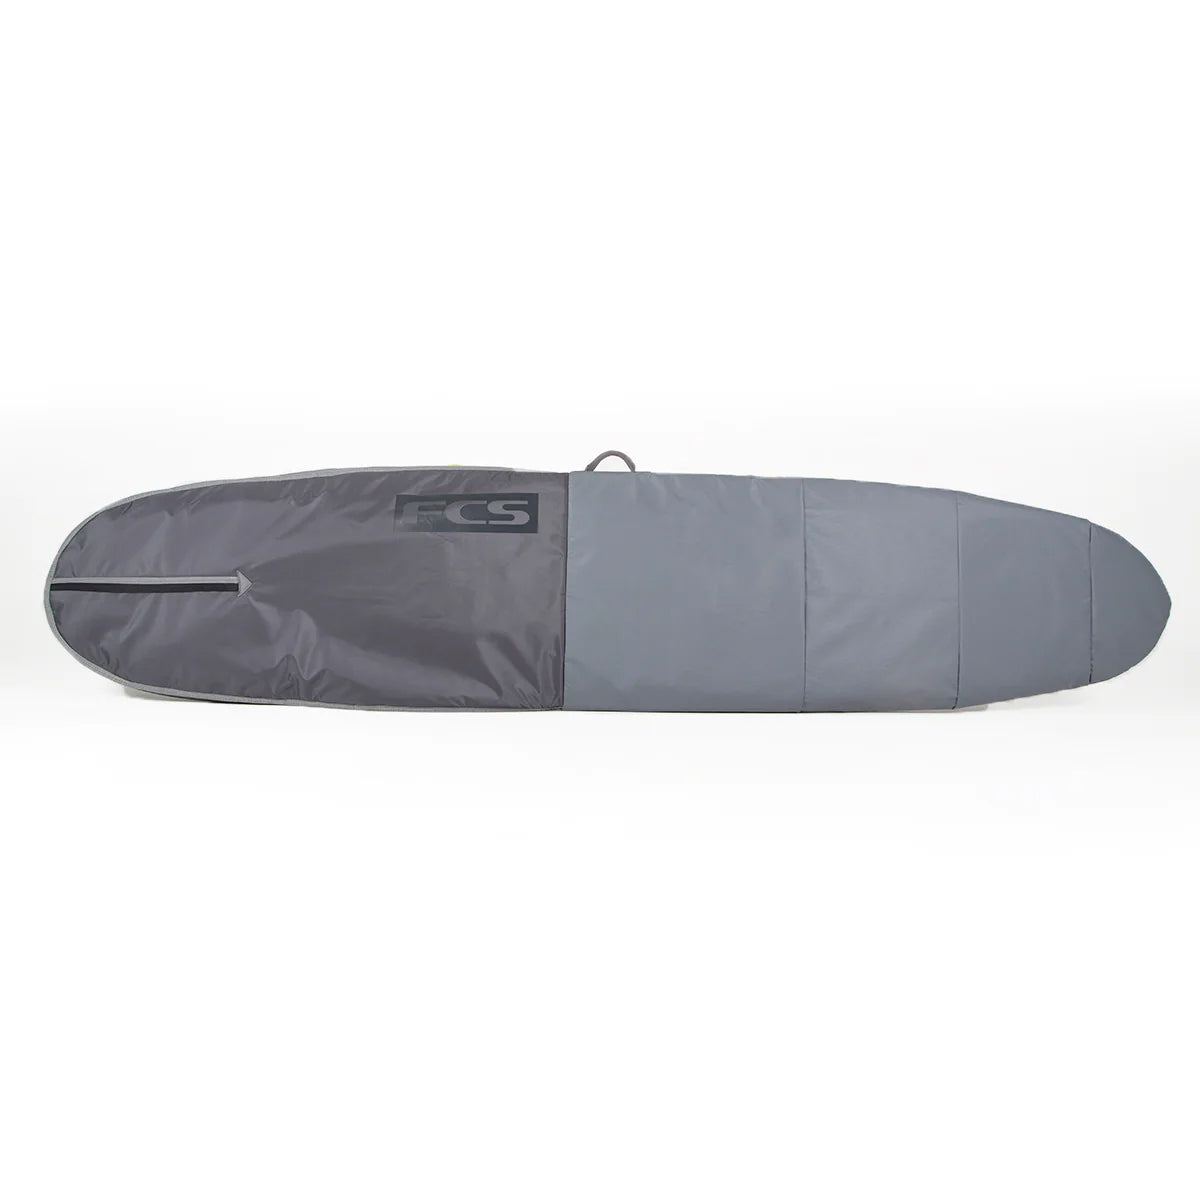 FCS 9'2" Day Longboard Bag